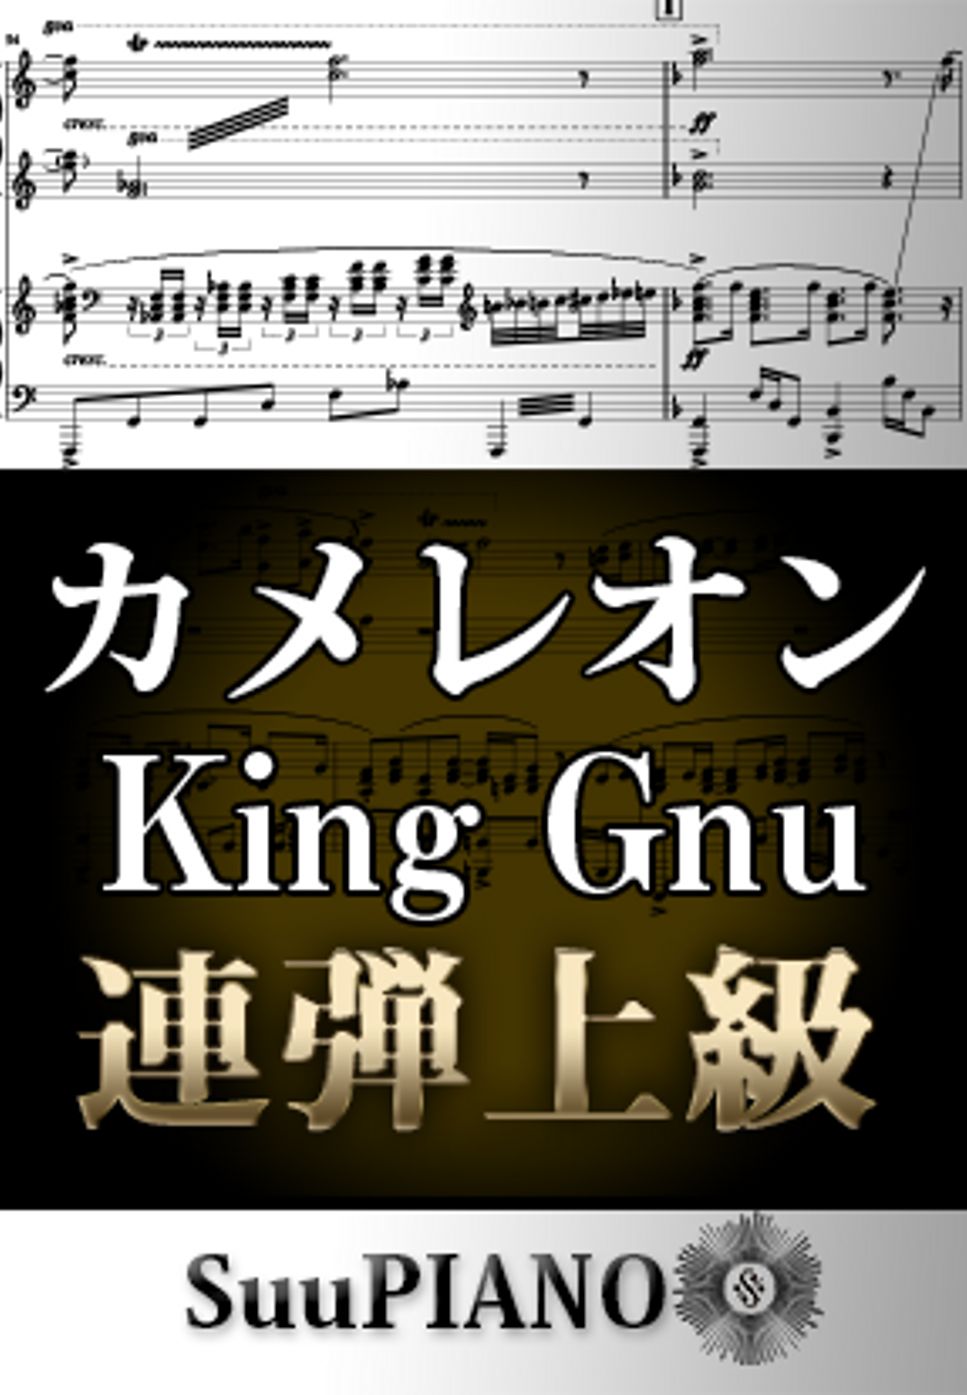 King Gnu - カメレオン (ピアノ連弾上級  / TVドラマ『ミステリと言う勿れ』主題歌) by Suu